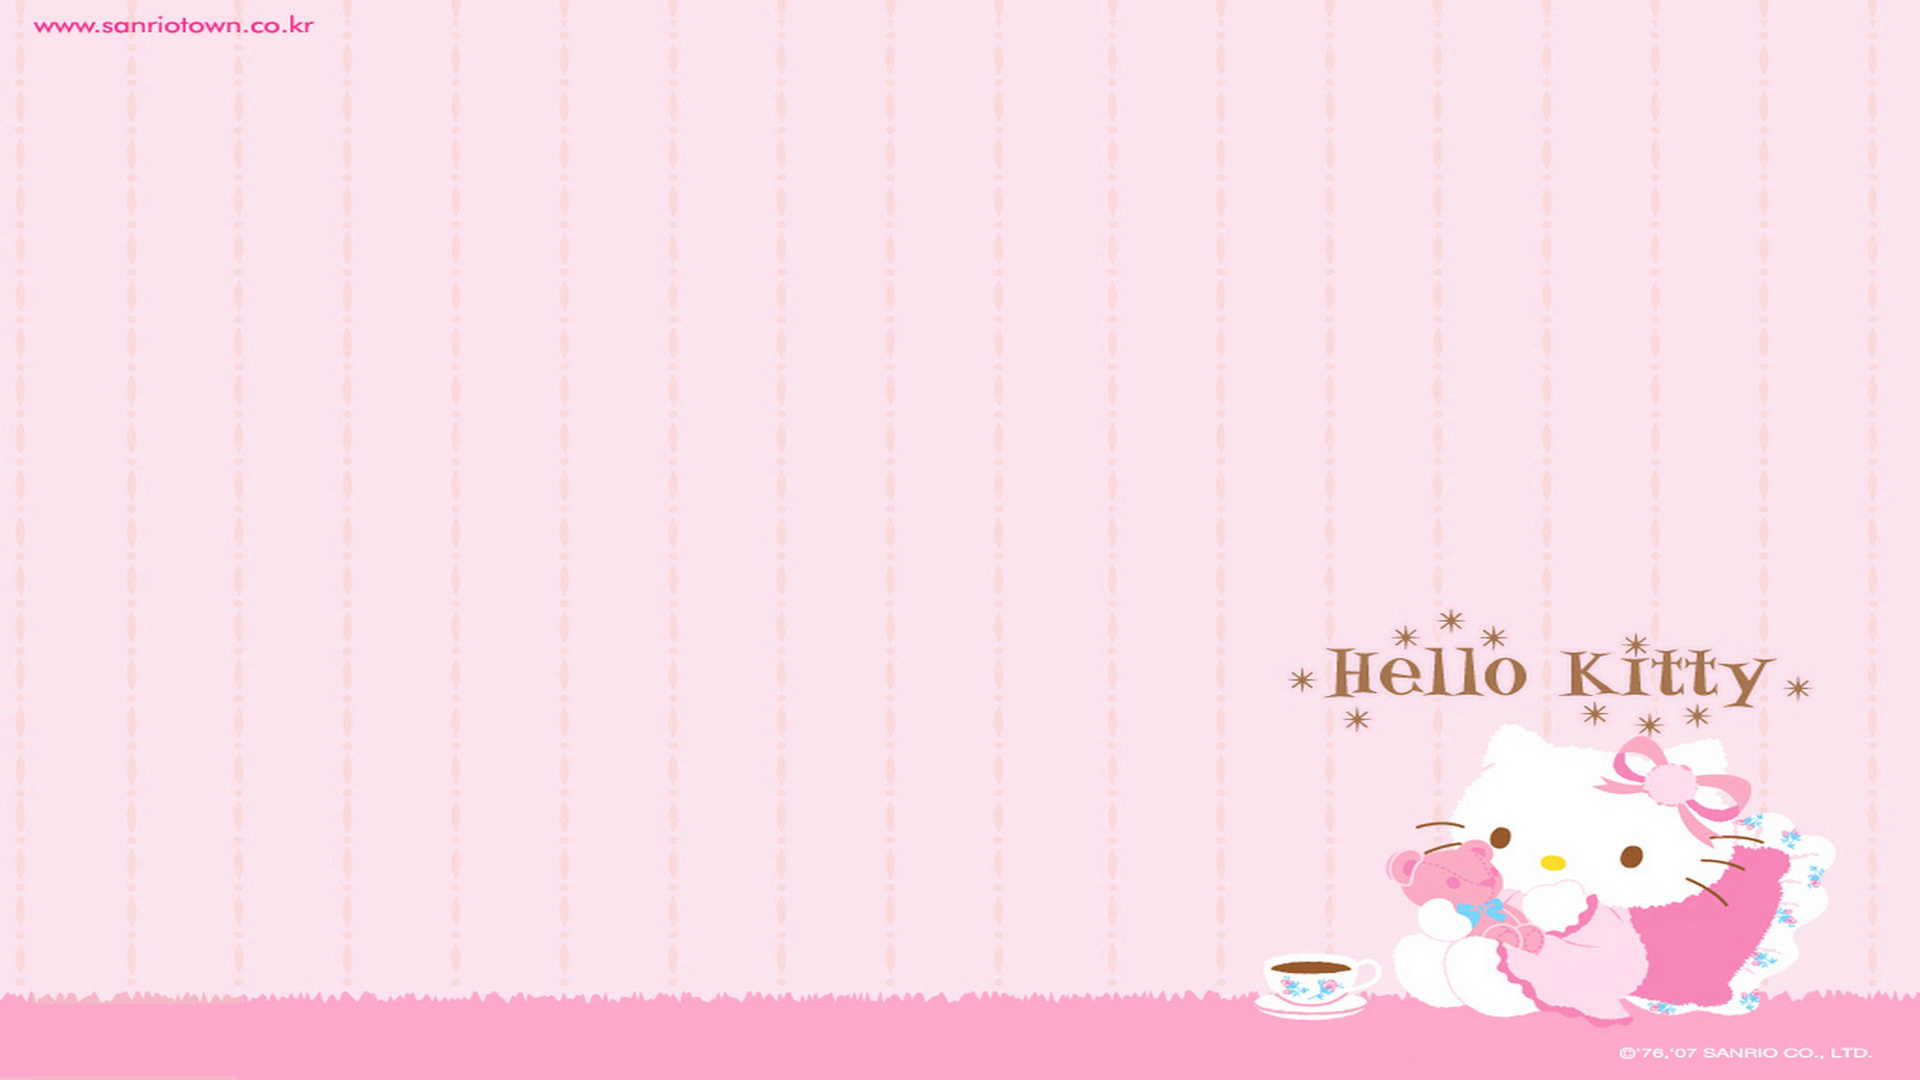 Ics Hello Kitty Wallpaper Image Image283 Htm